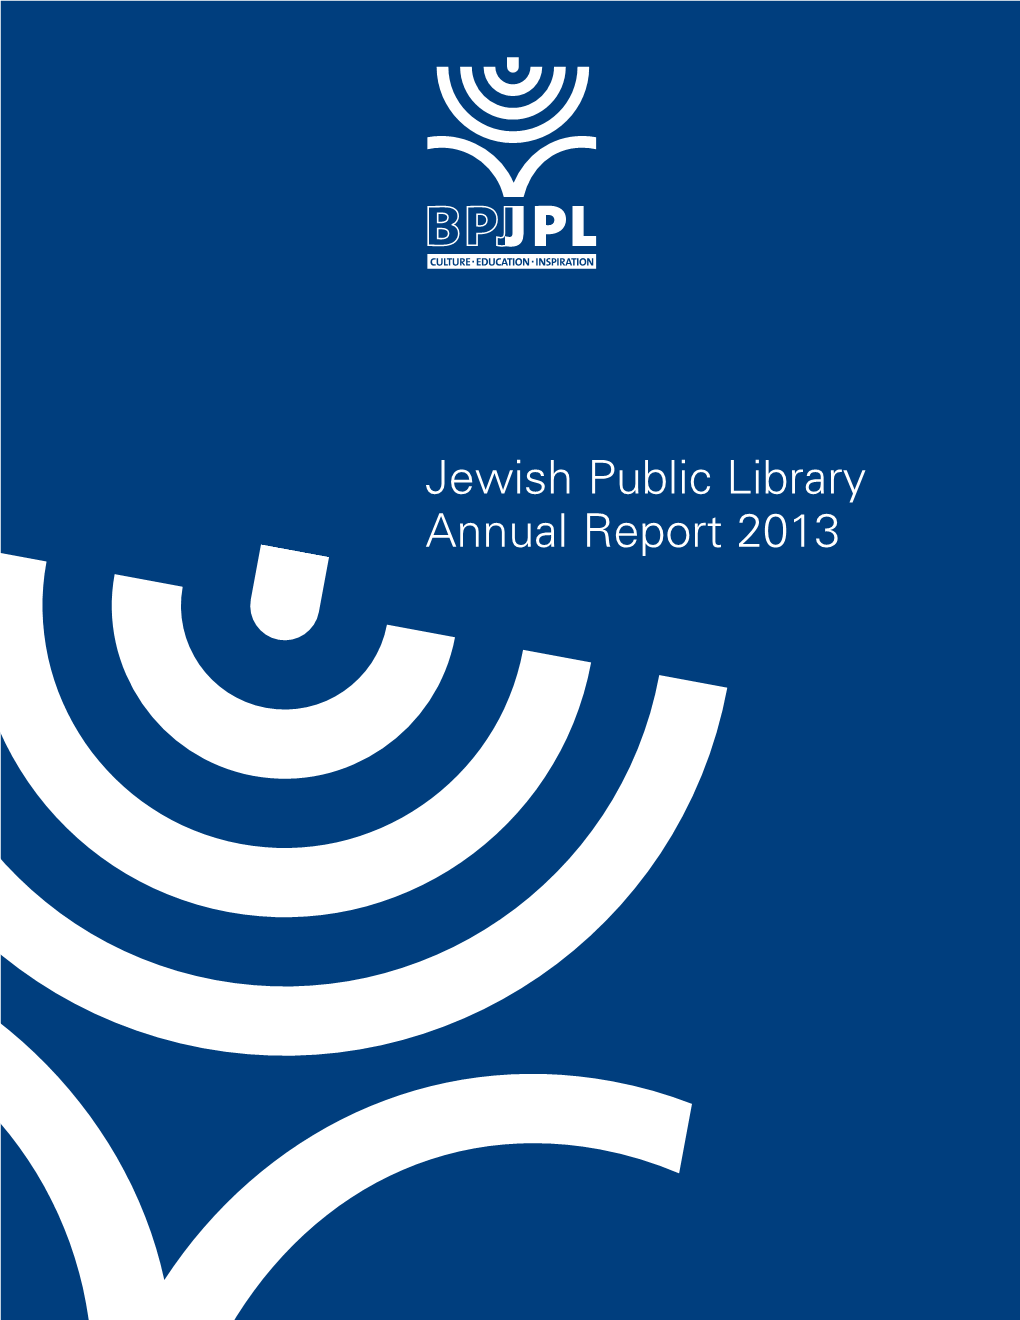 Jewish Public Library Annual Report 2013 Contents